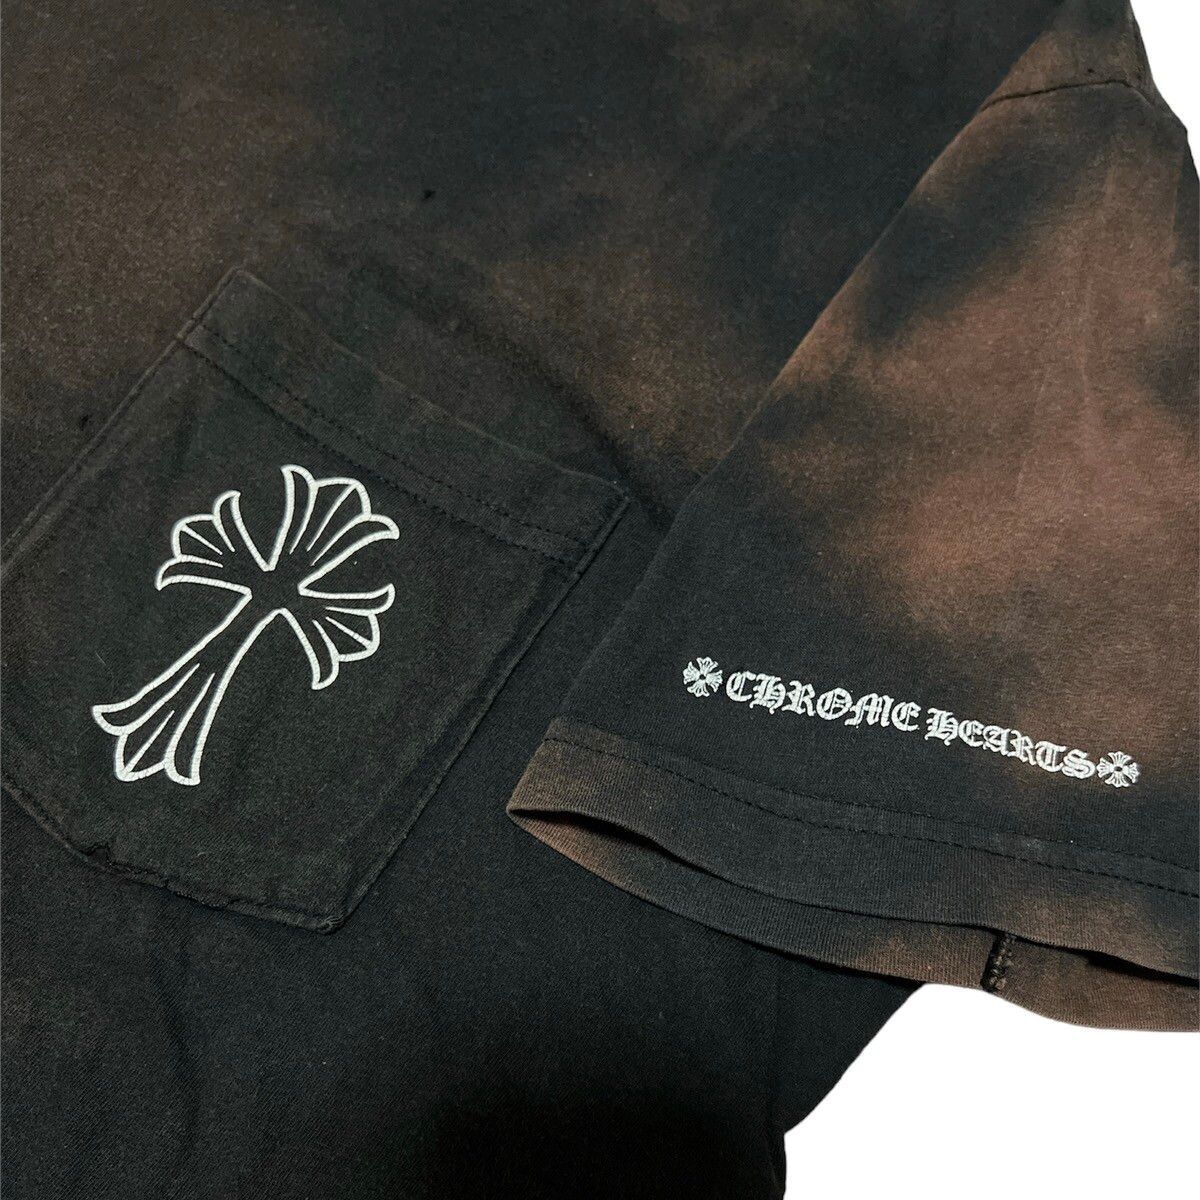 Chrome Hearts cross pocket t shirt - 3